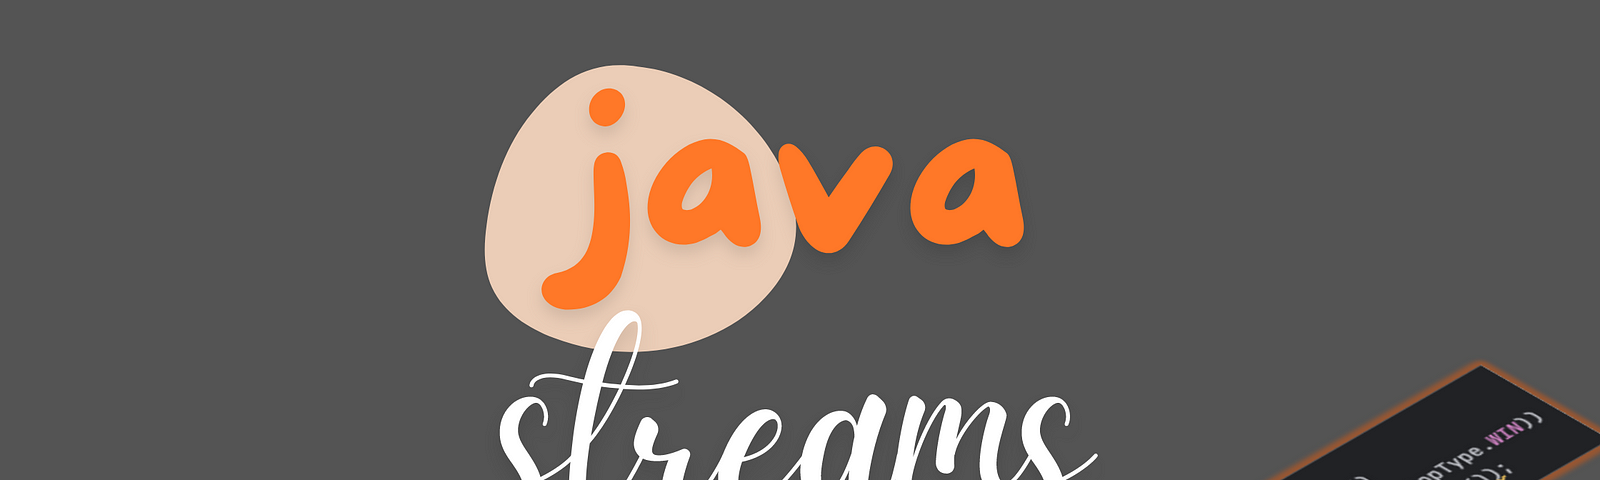 Let us learn Java Streams